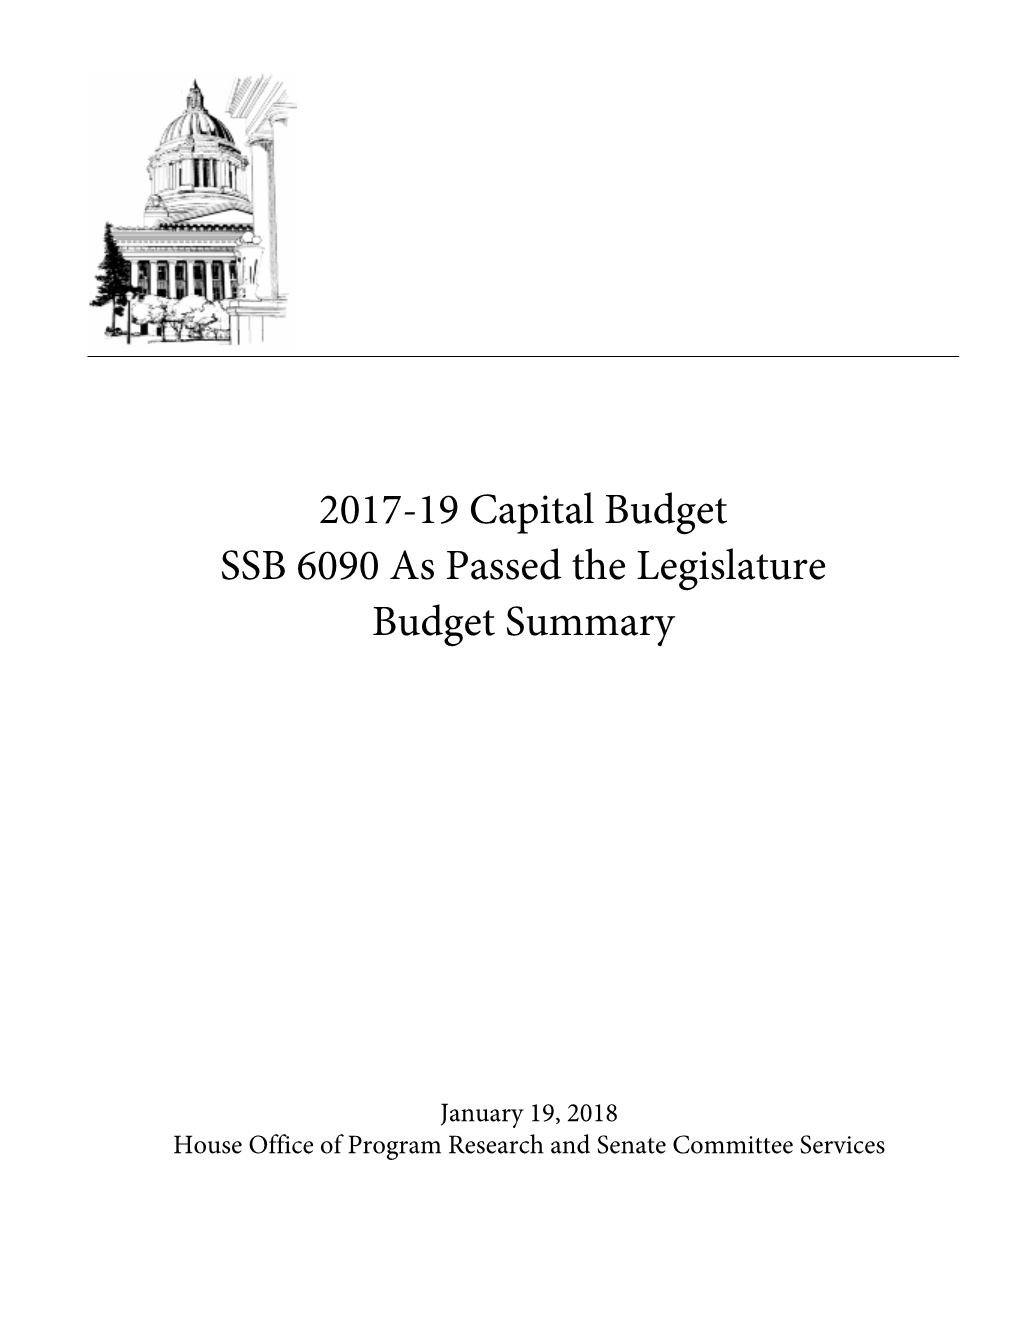 2017-19 Capital Budget SSB 6090 As Passed the Legislature Budget Summary